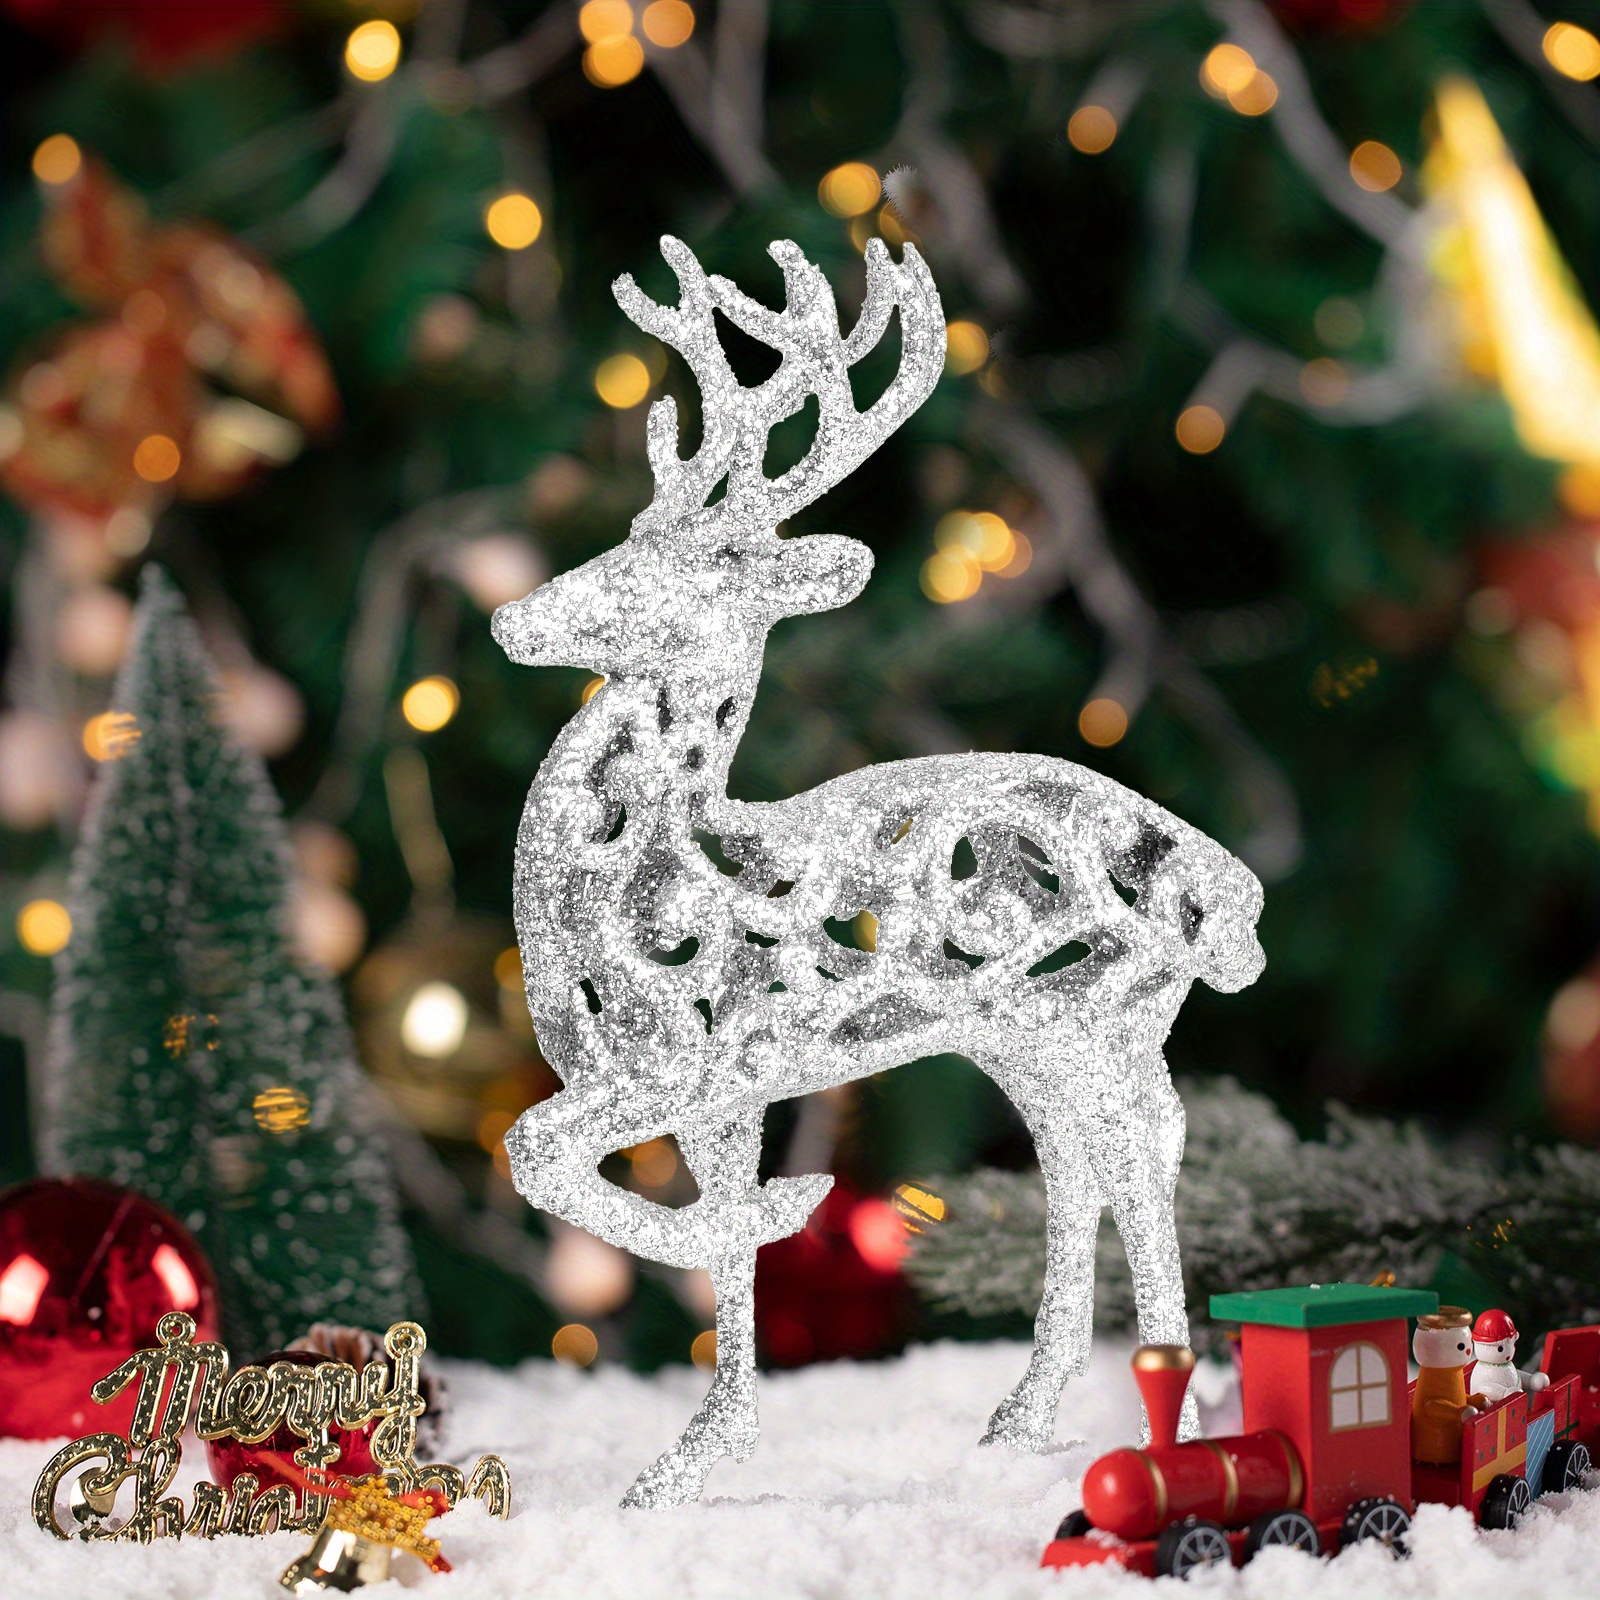 2pcs/6pcs Golden Christmas Reindeer Figurine, Christmas Deer Status For  Christmas Decorations, Reindeer Christmas Ornaments For Gifts Layout  Decorativ